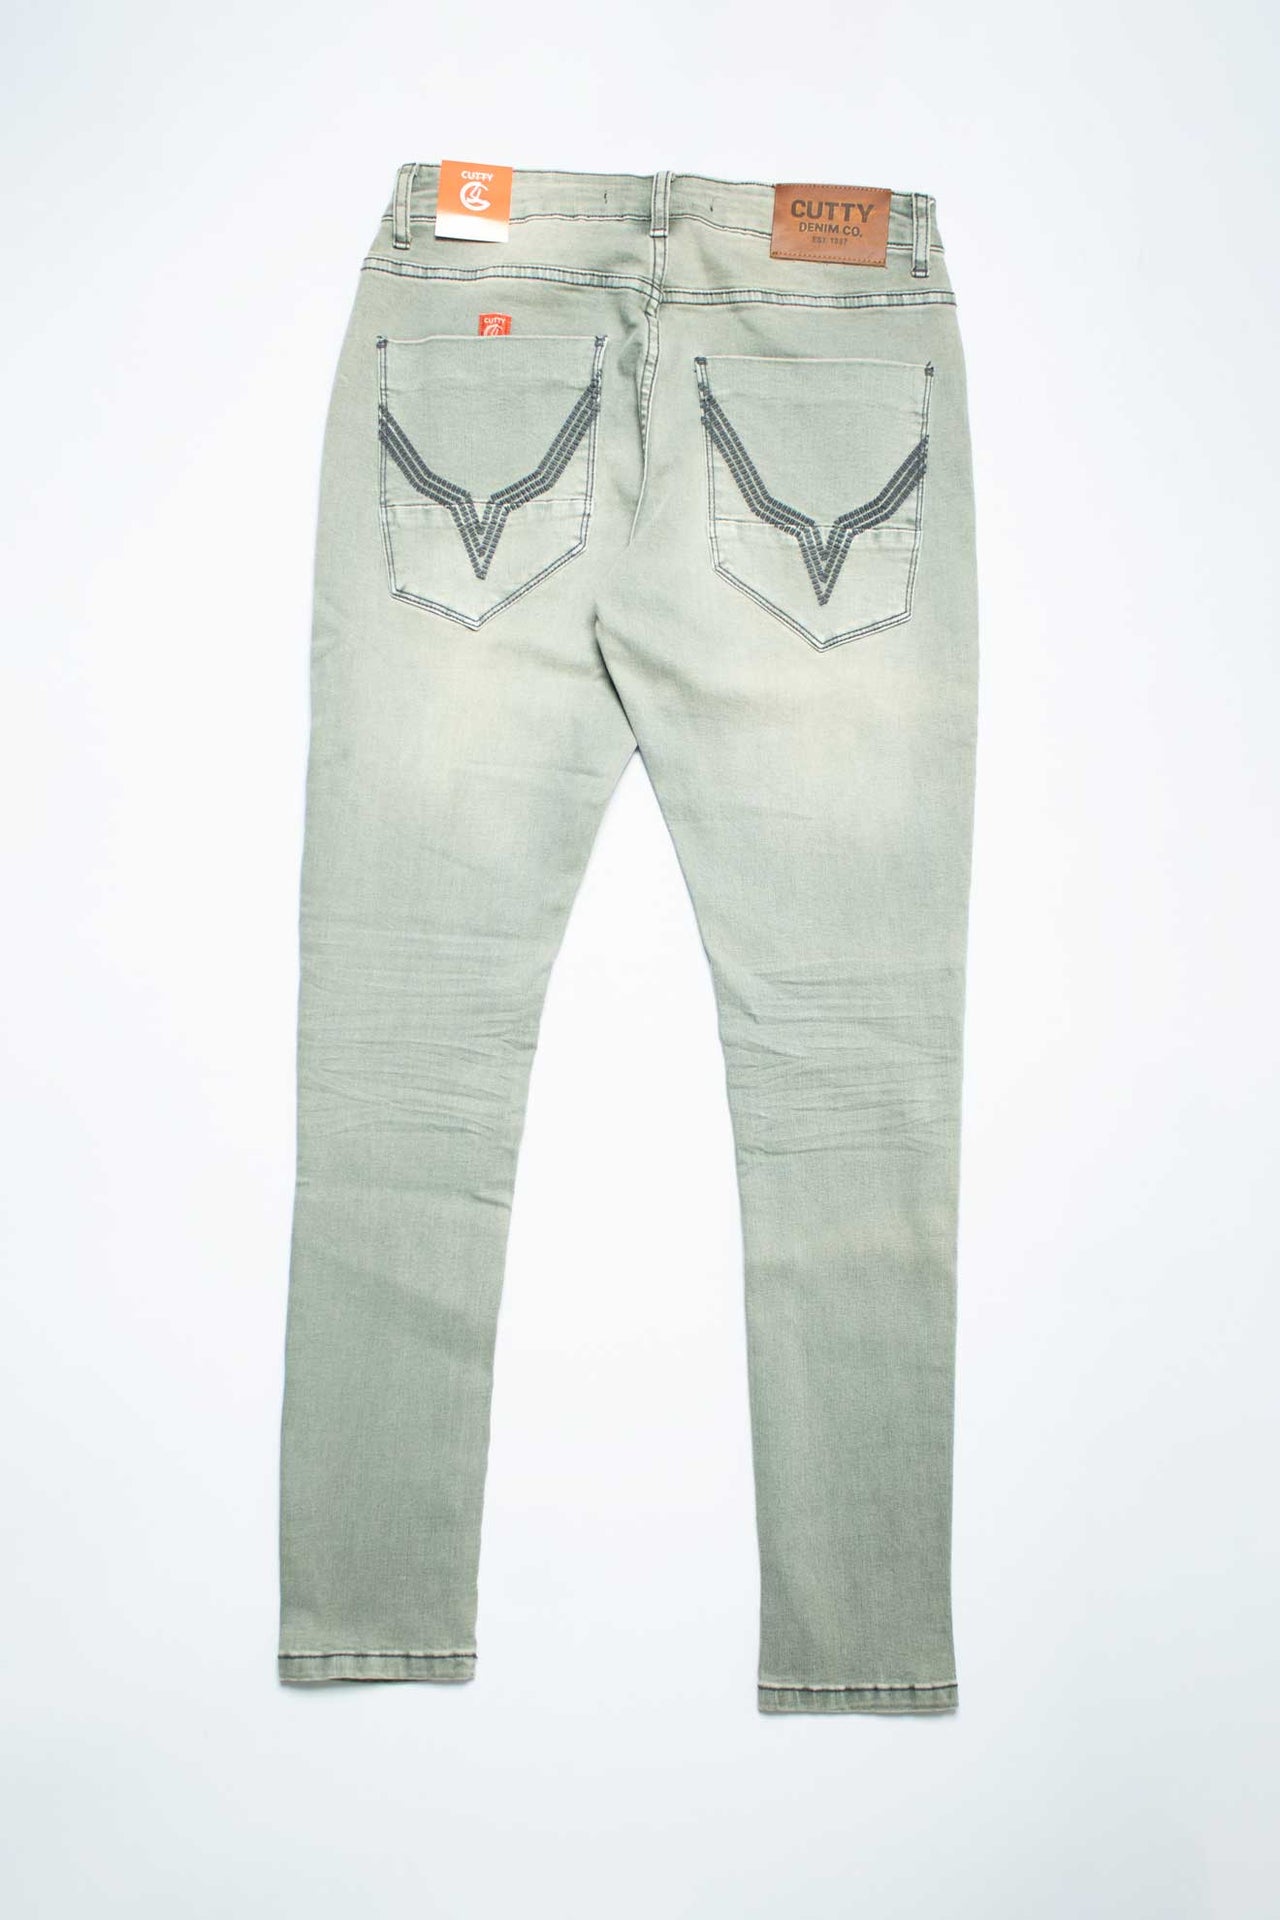 Cutty Shooter Tint Jeans - BOSSINI SA